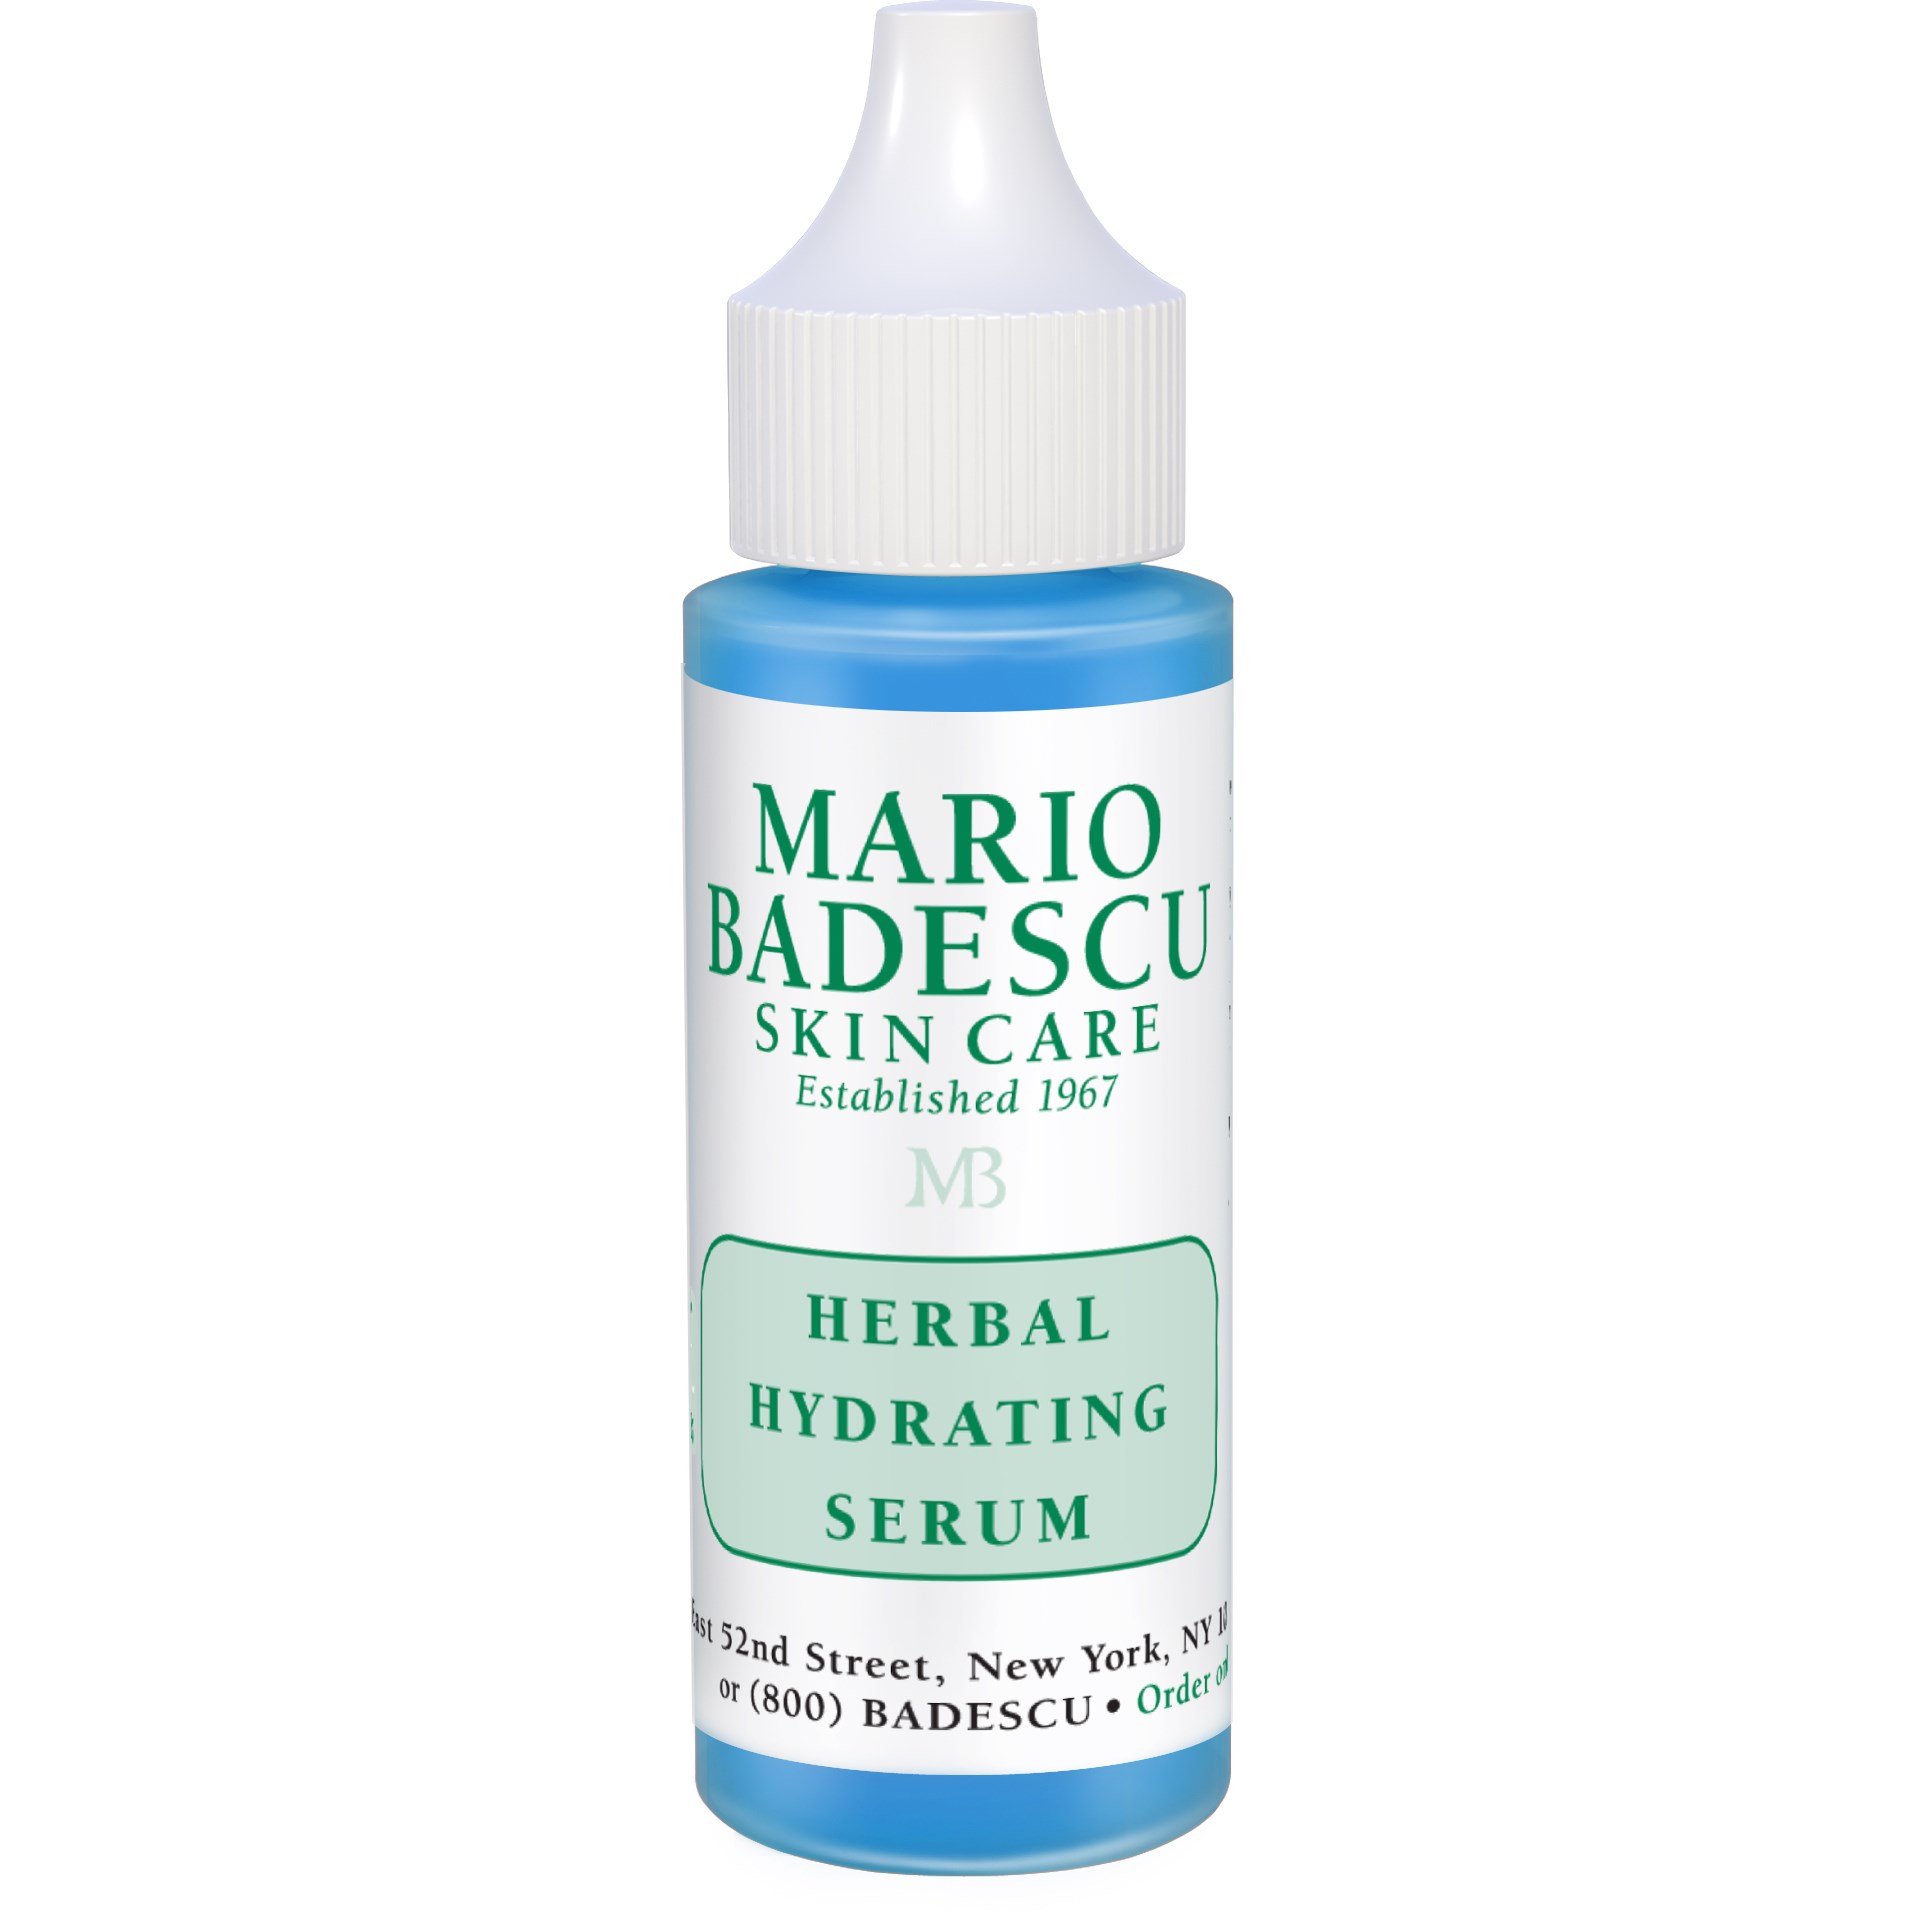 Mario Badescu Herbal Hydrating Serum 29 ml